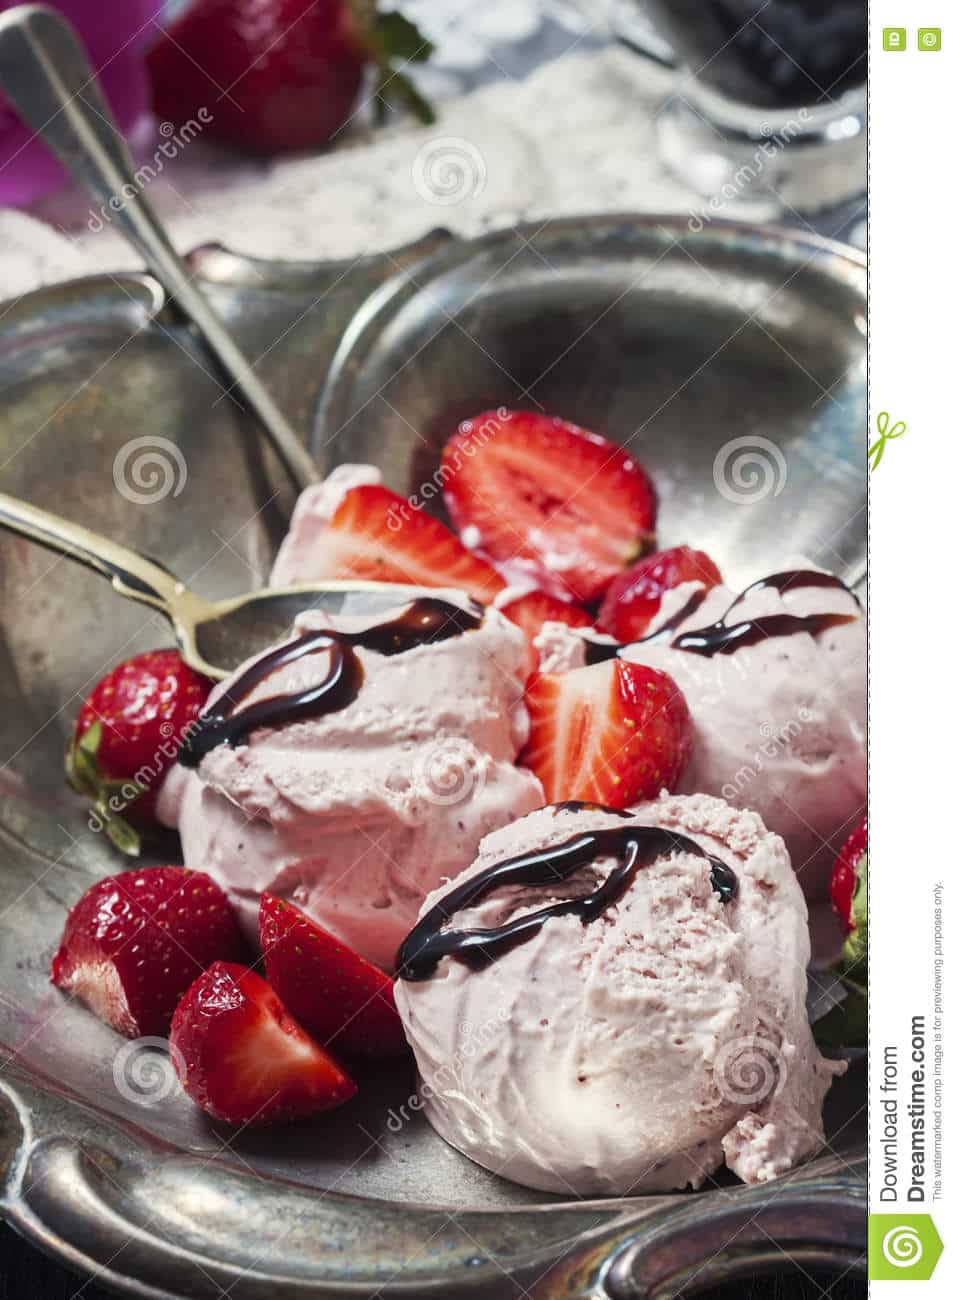 strawberry-ice-cream-with-red-wine-vinegar-2